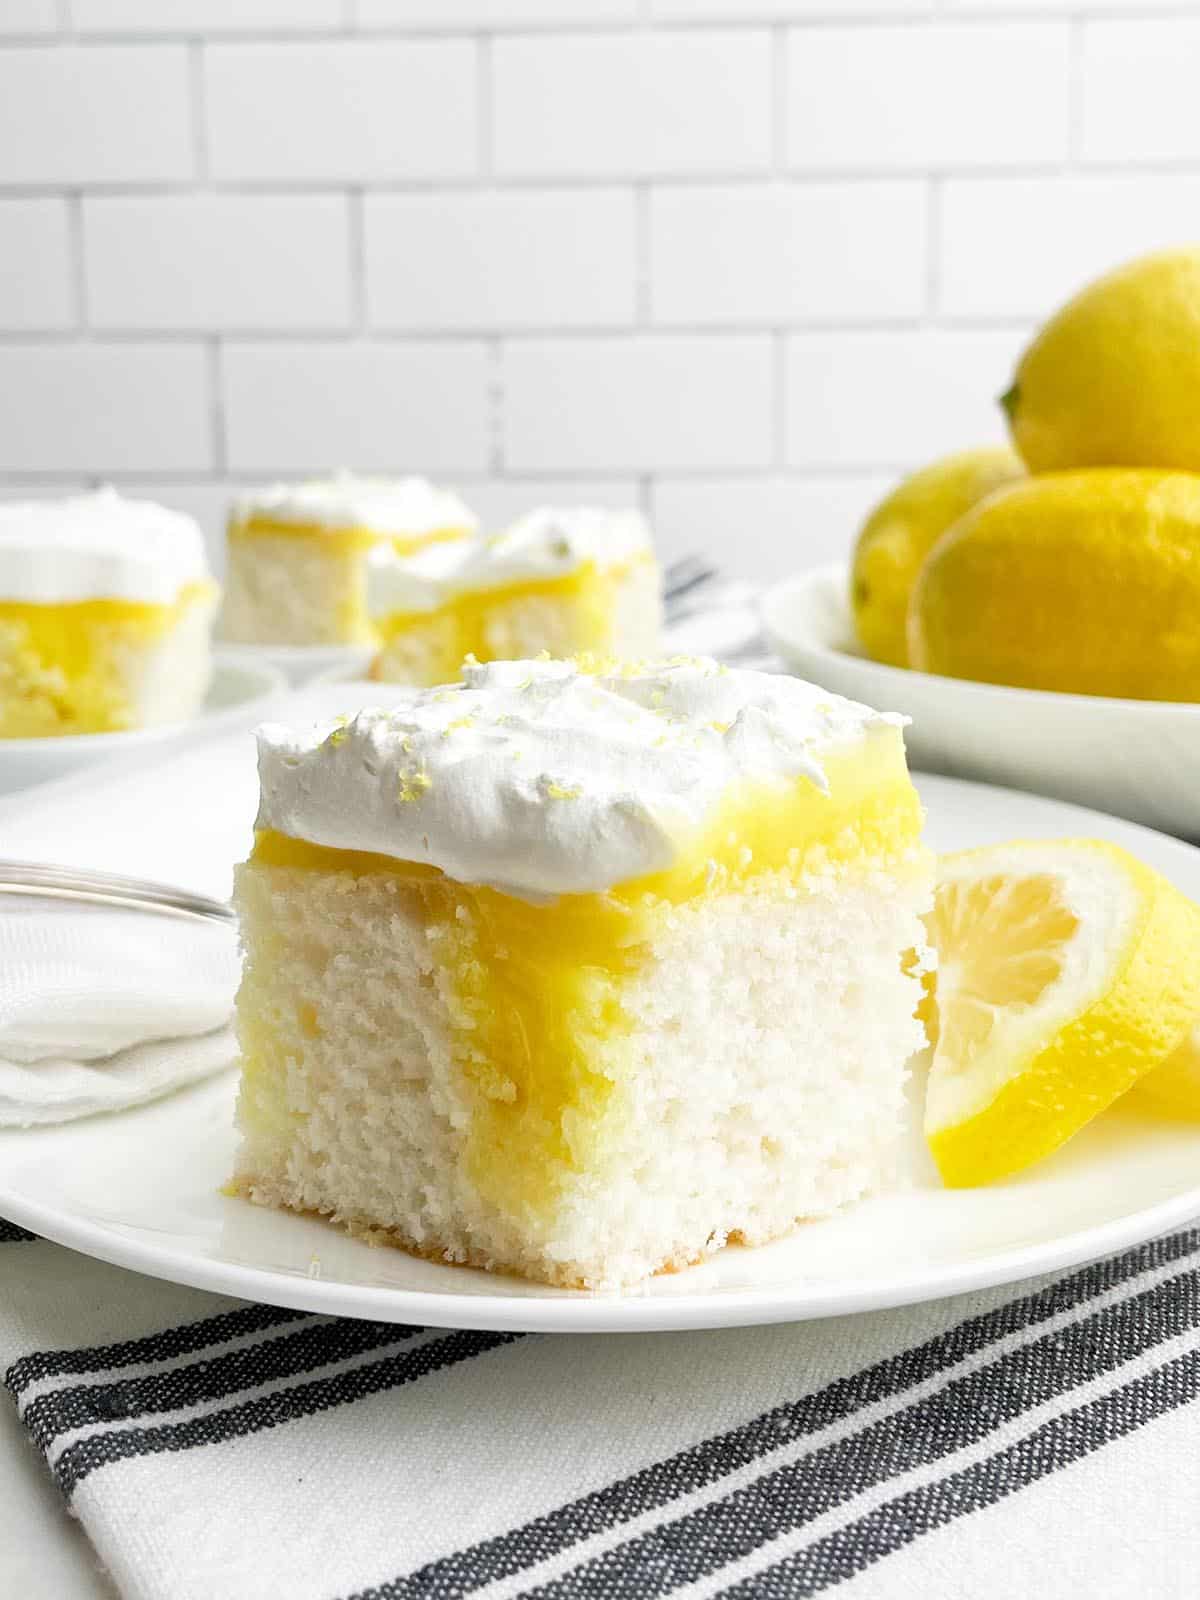 Piece of lemon poke cake.